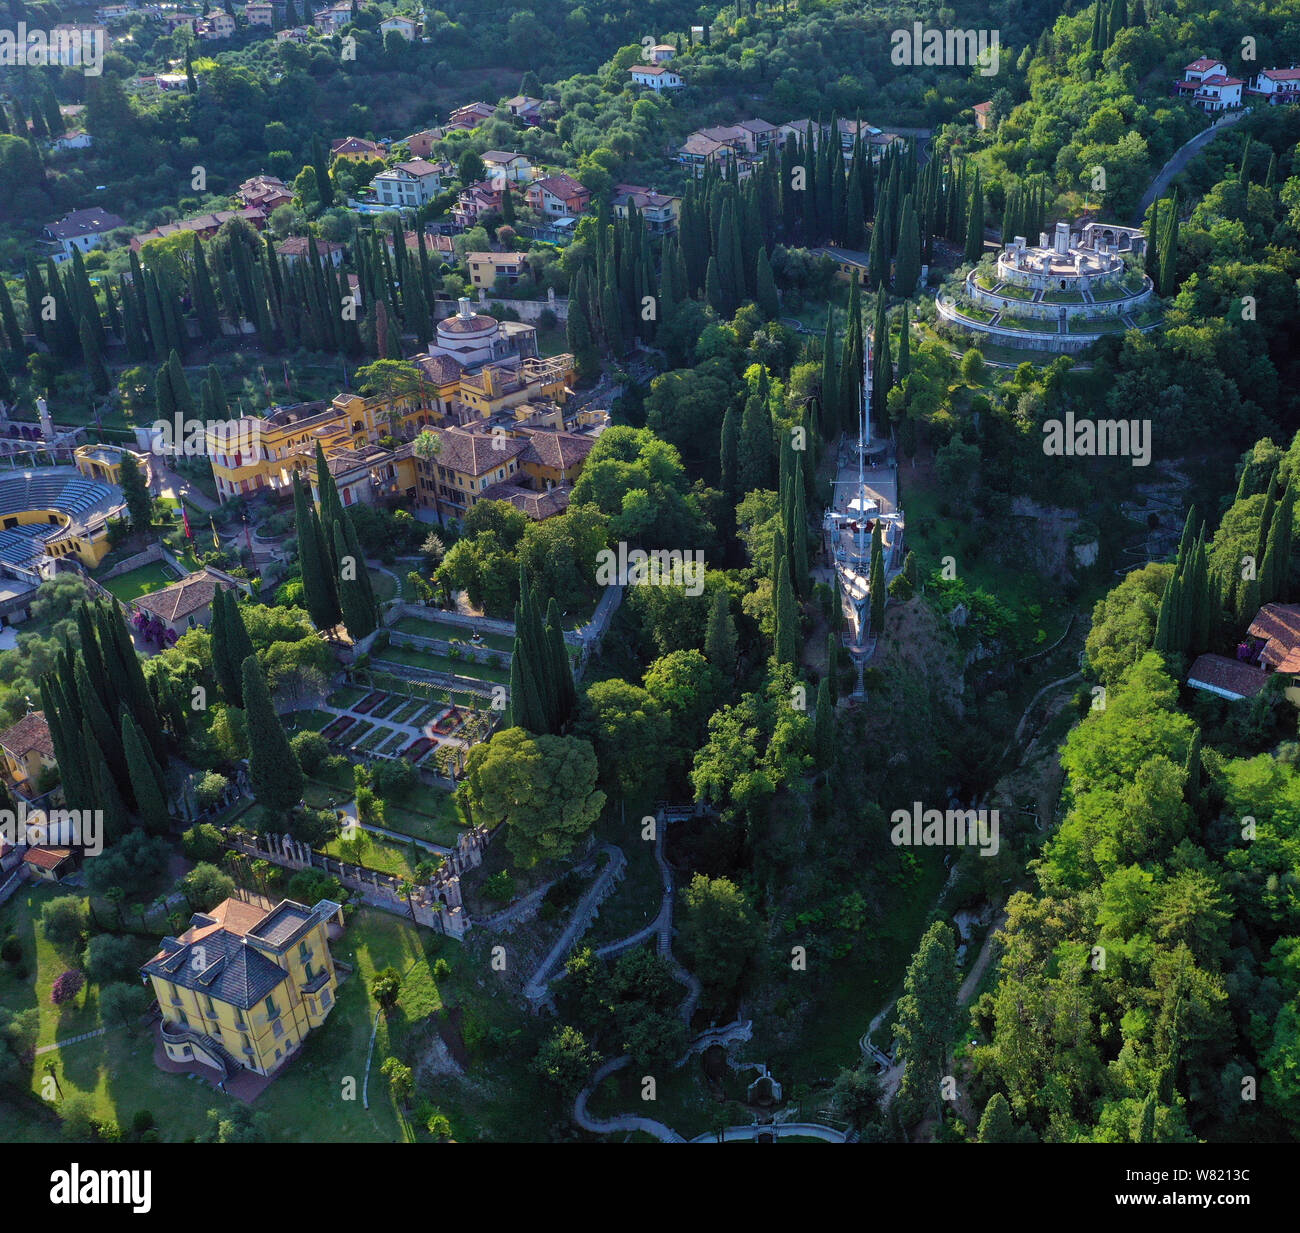 Gardone Riviera, Brescia, Lombardy, Italy - 08/03/2019: Aerial view of the Vittoriale degli Italiani the residence of the Italian writer Gabriele d’An Stock Photo